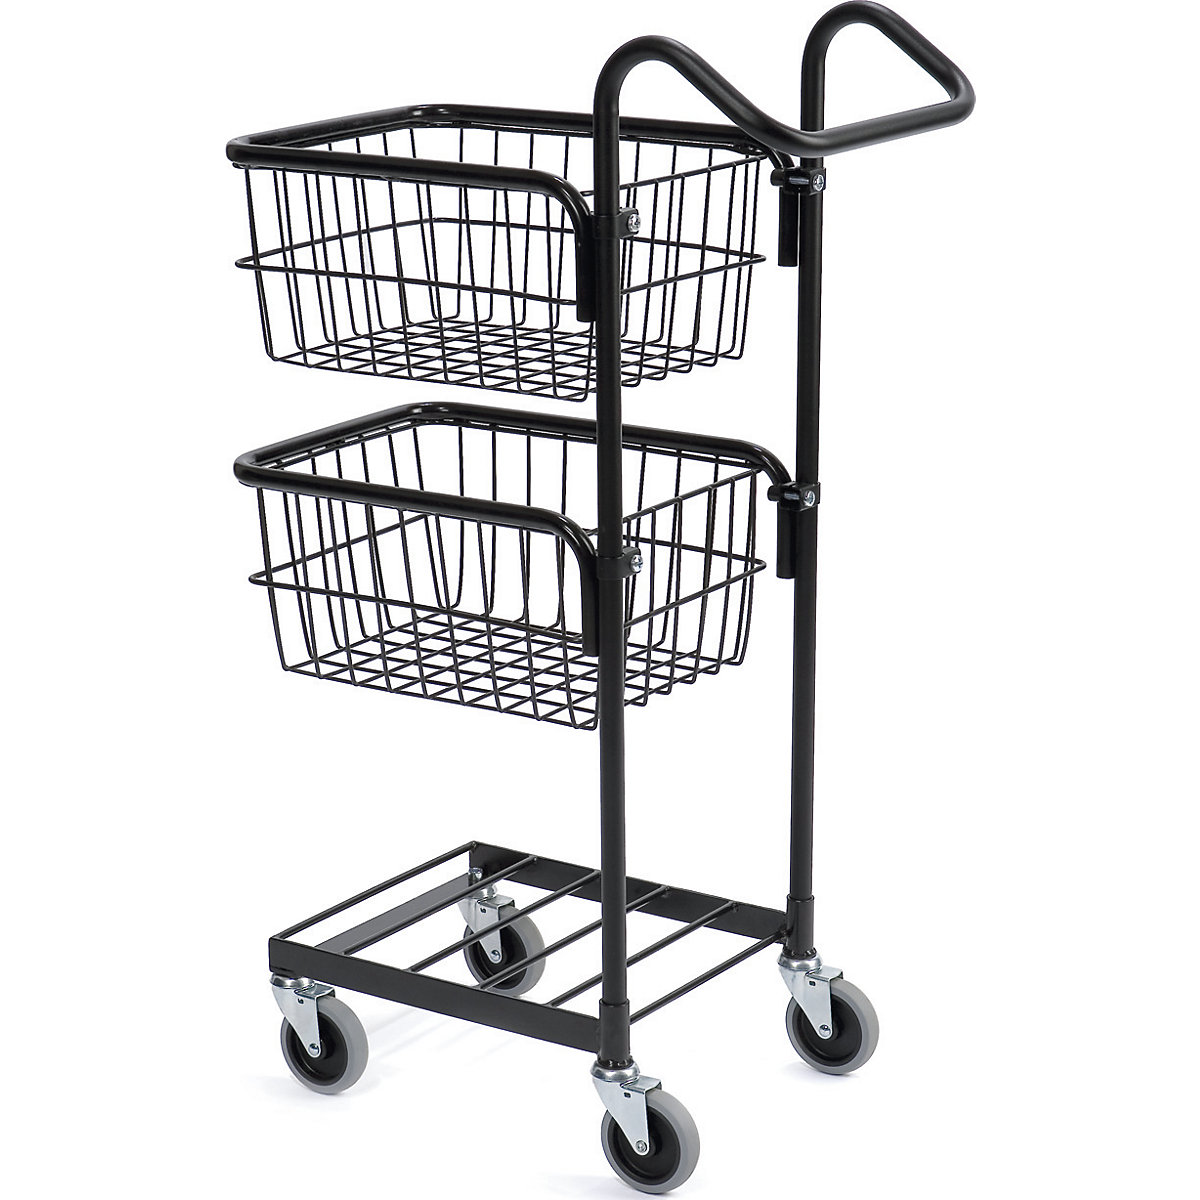 KOMPAKT retail bin – HelgeNyberg, 2 baskets, black frame, 5+ items-13